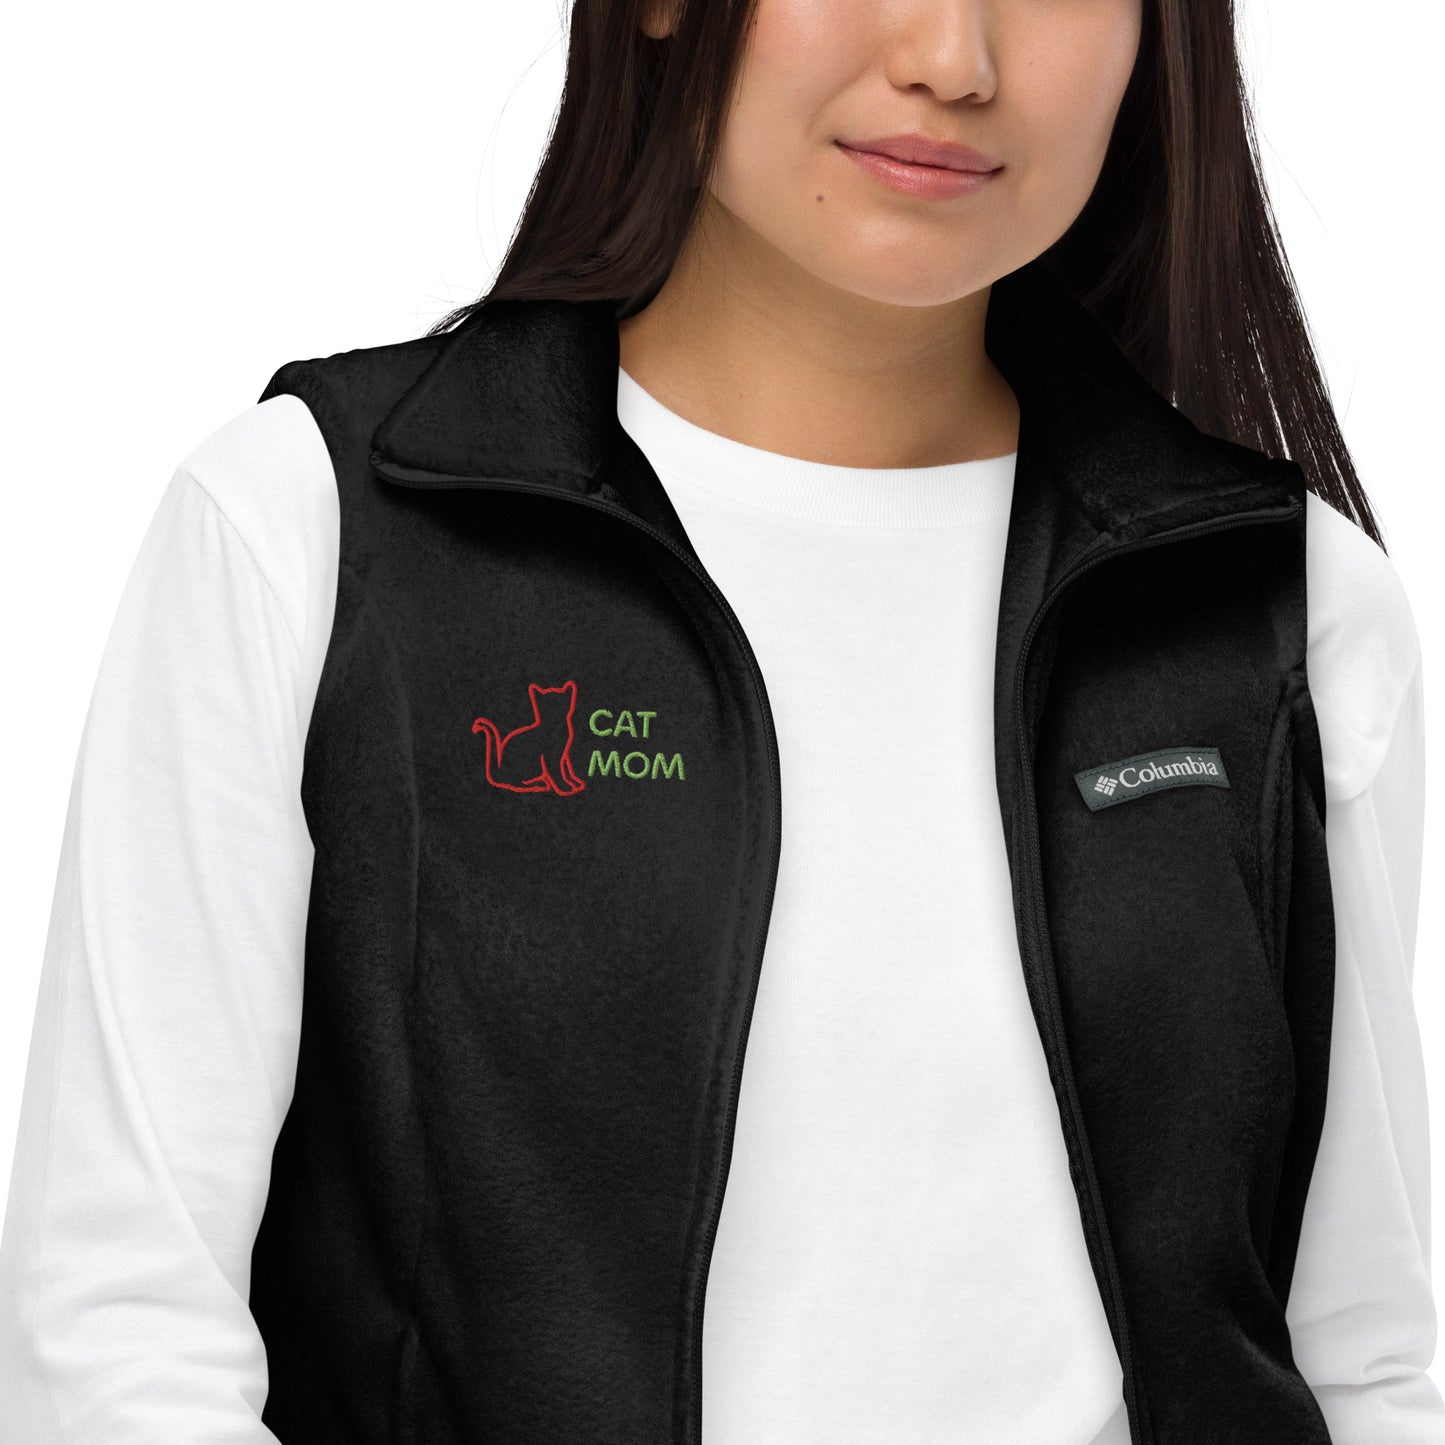 Women’s Columbia fleece vest With Pocket Cat Mom Embroidery